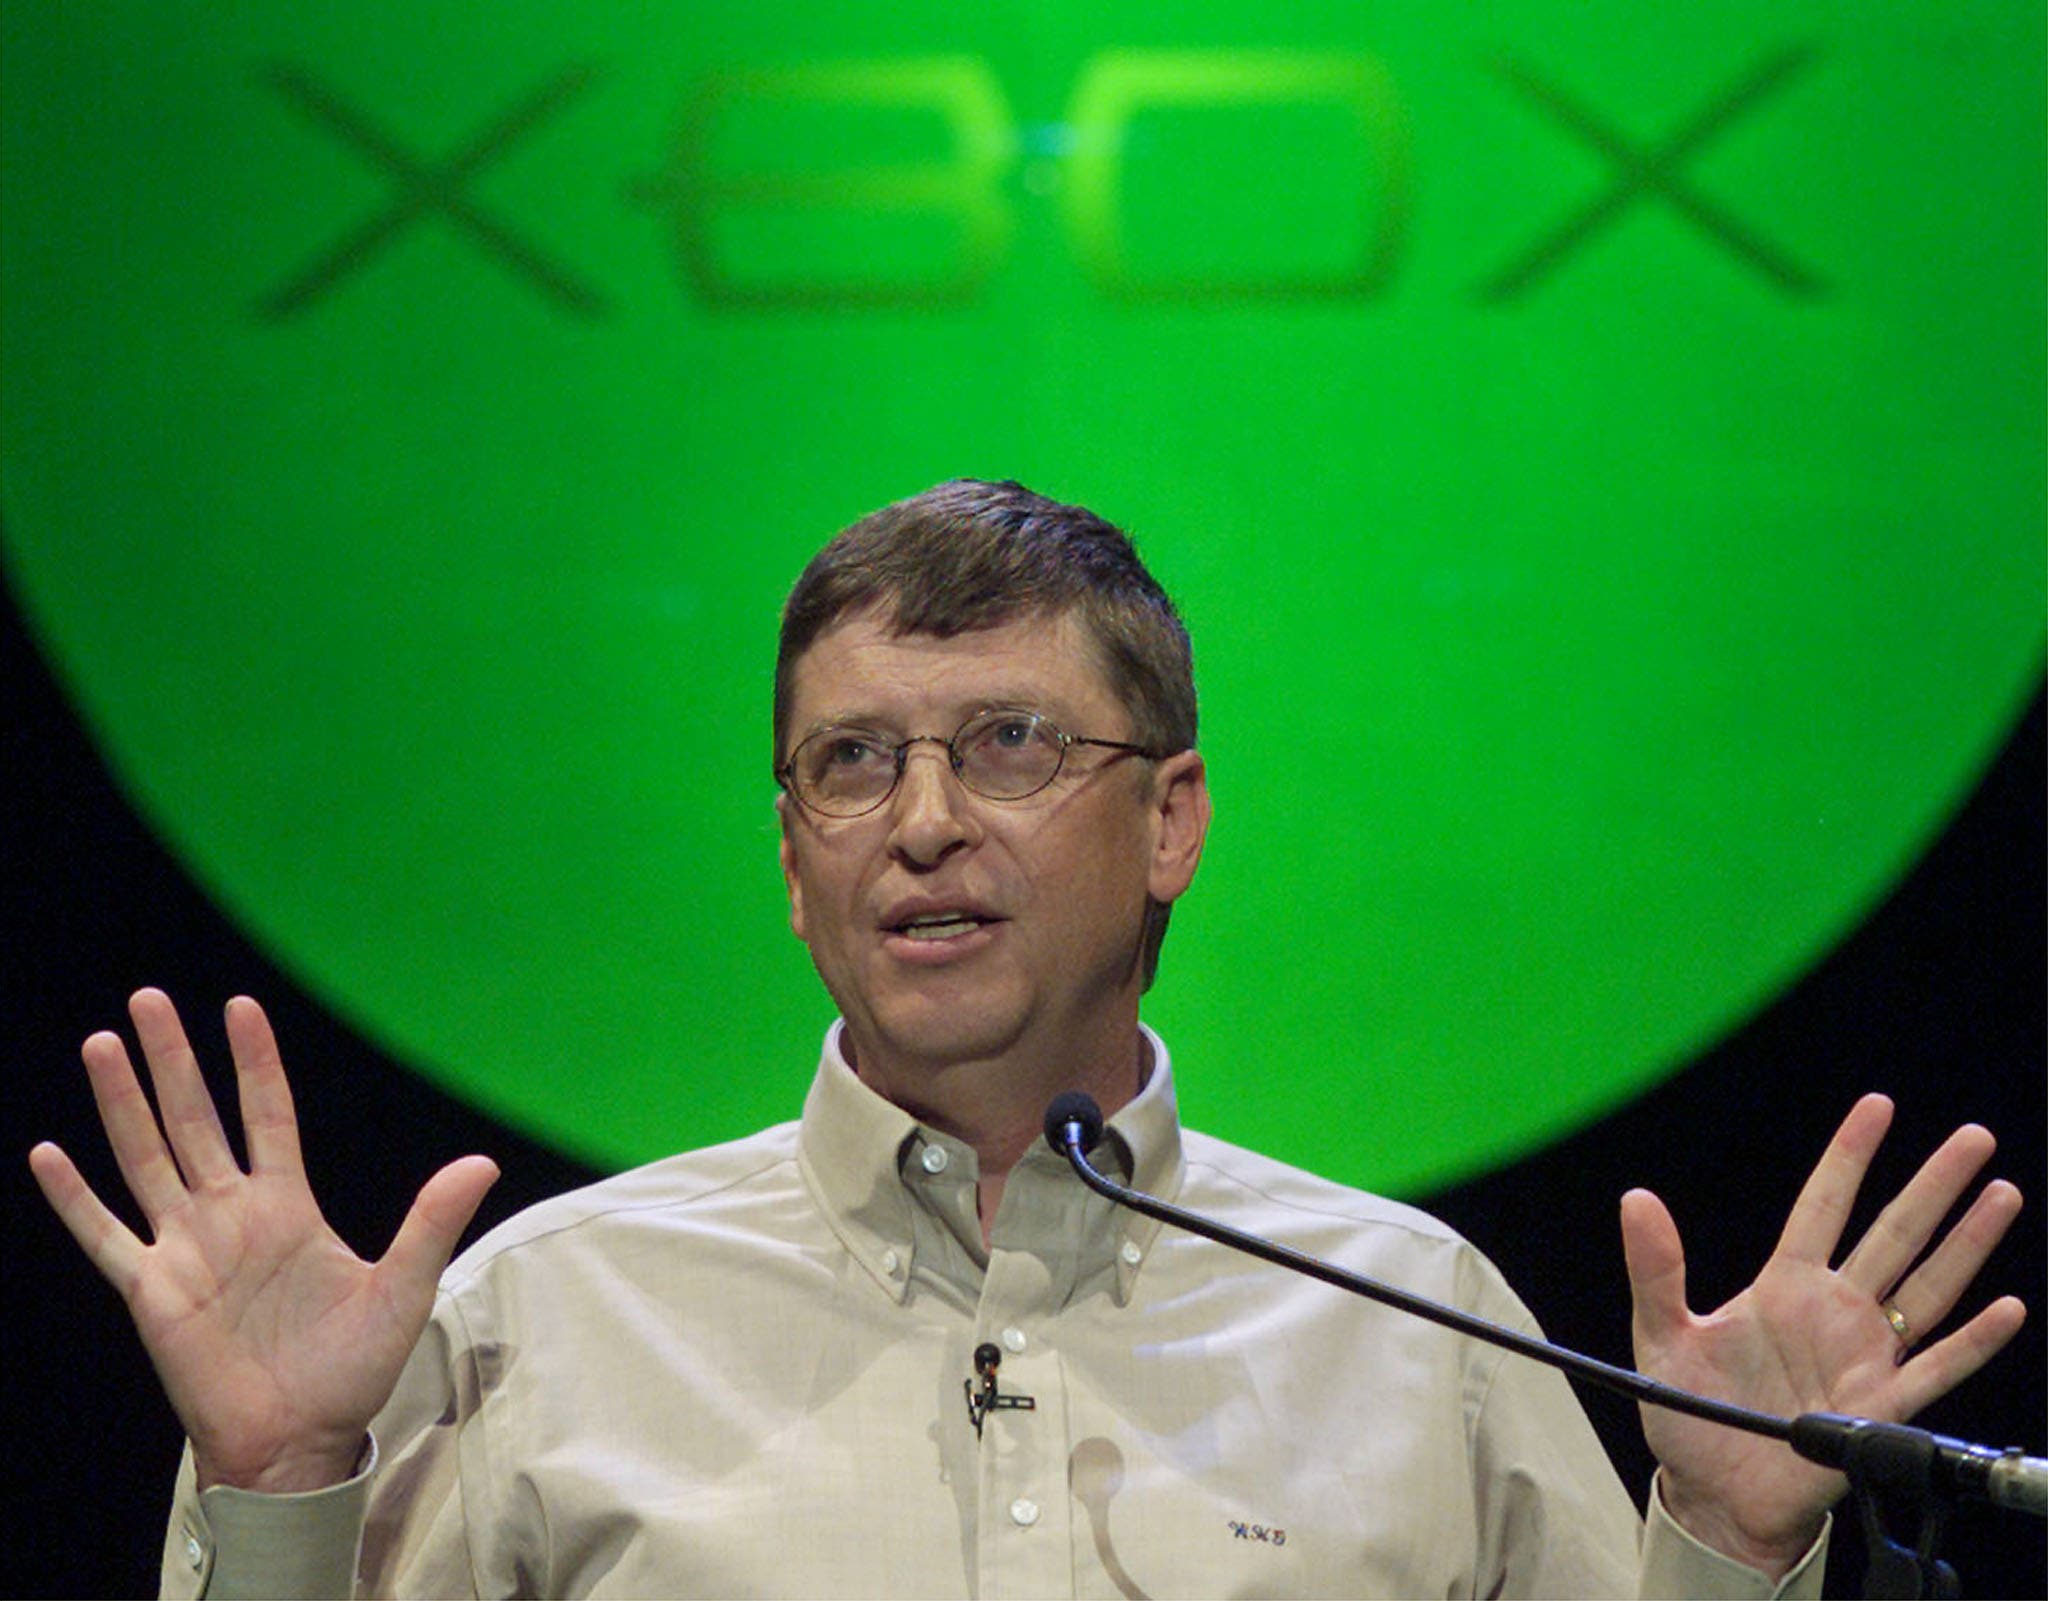 Bill Gates hand